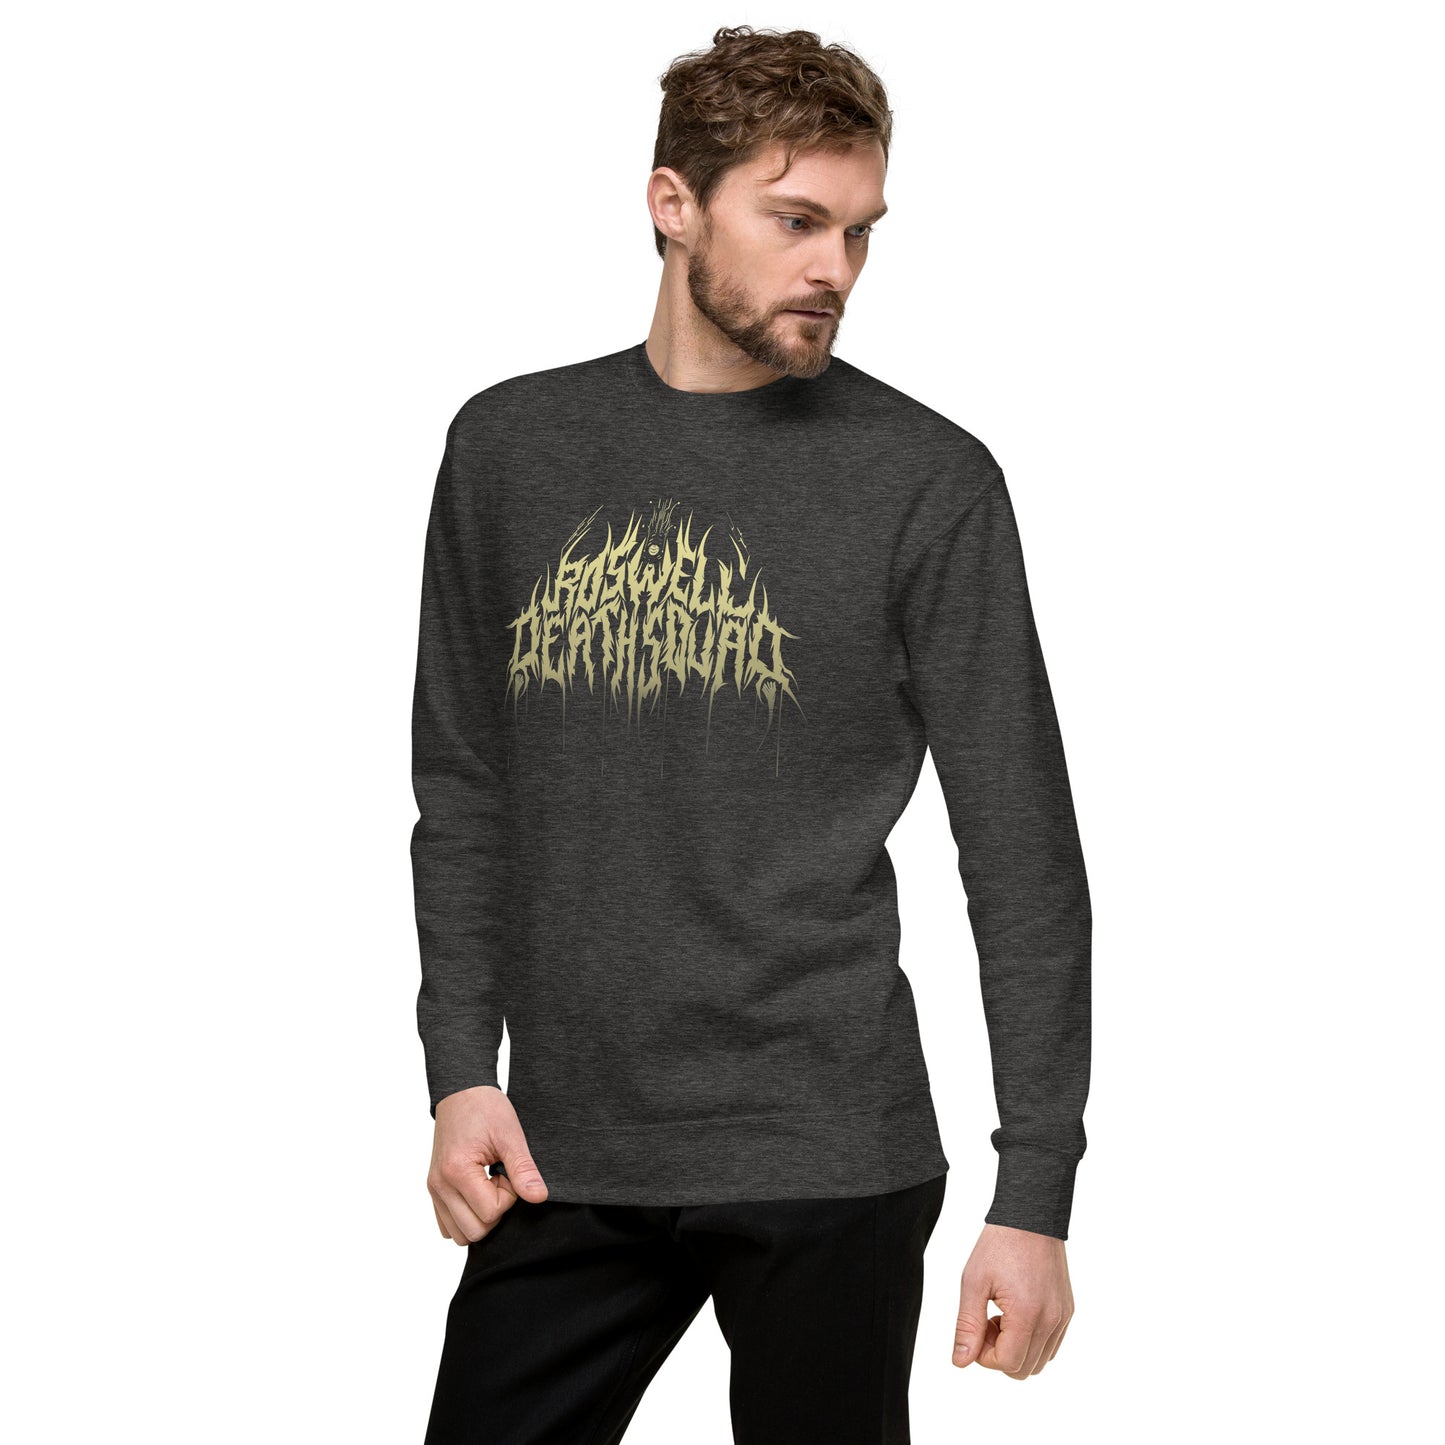 Roswell Deathsquad Unisex Sweatshirt (Gold Edition)